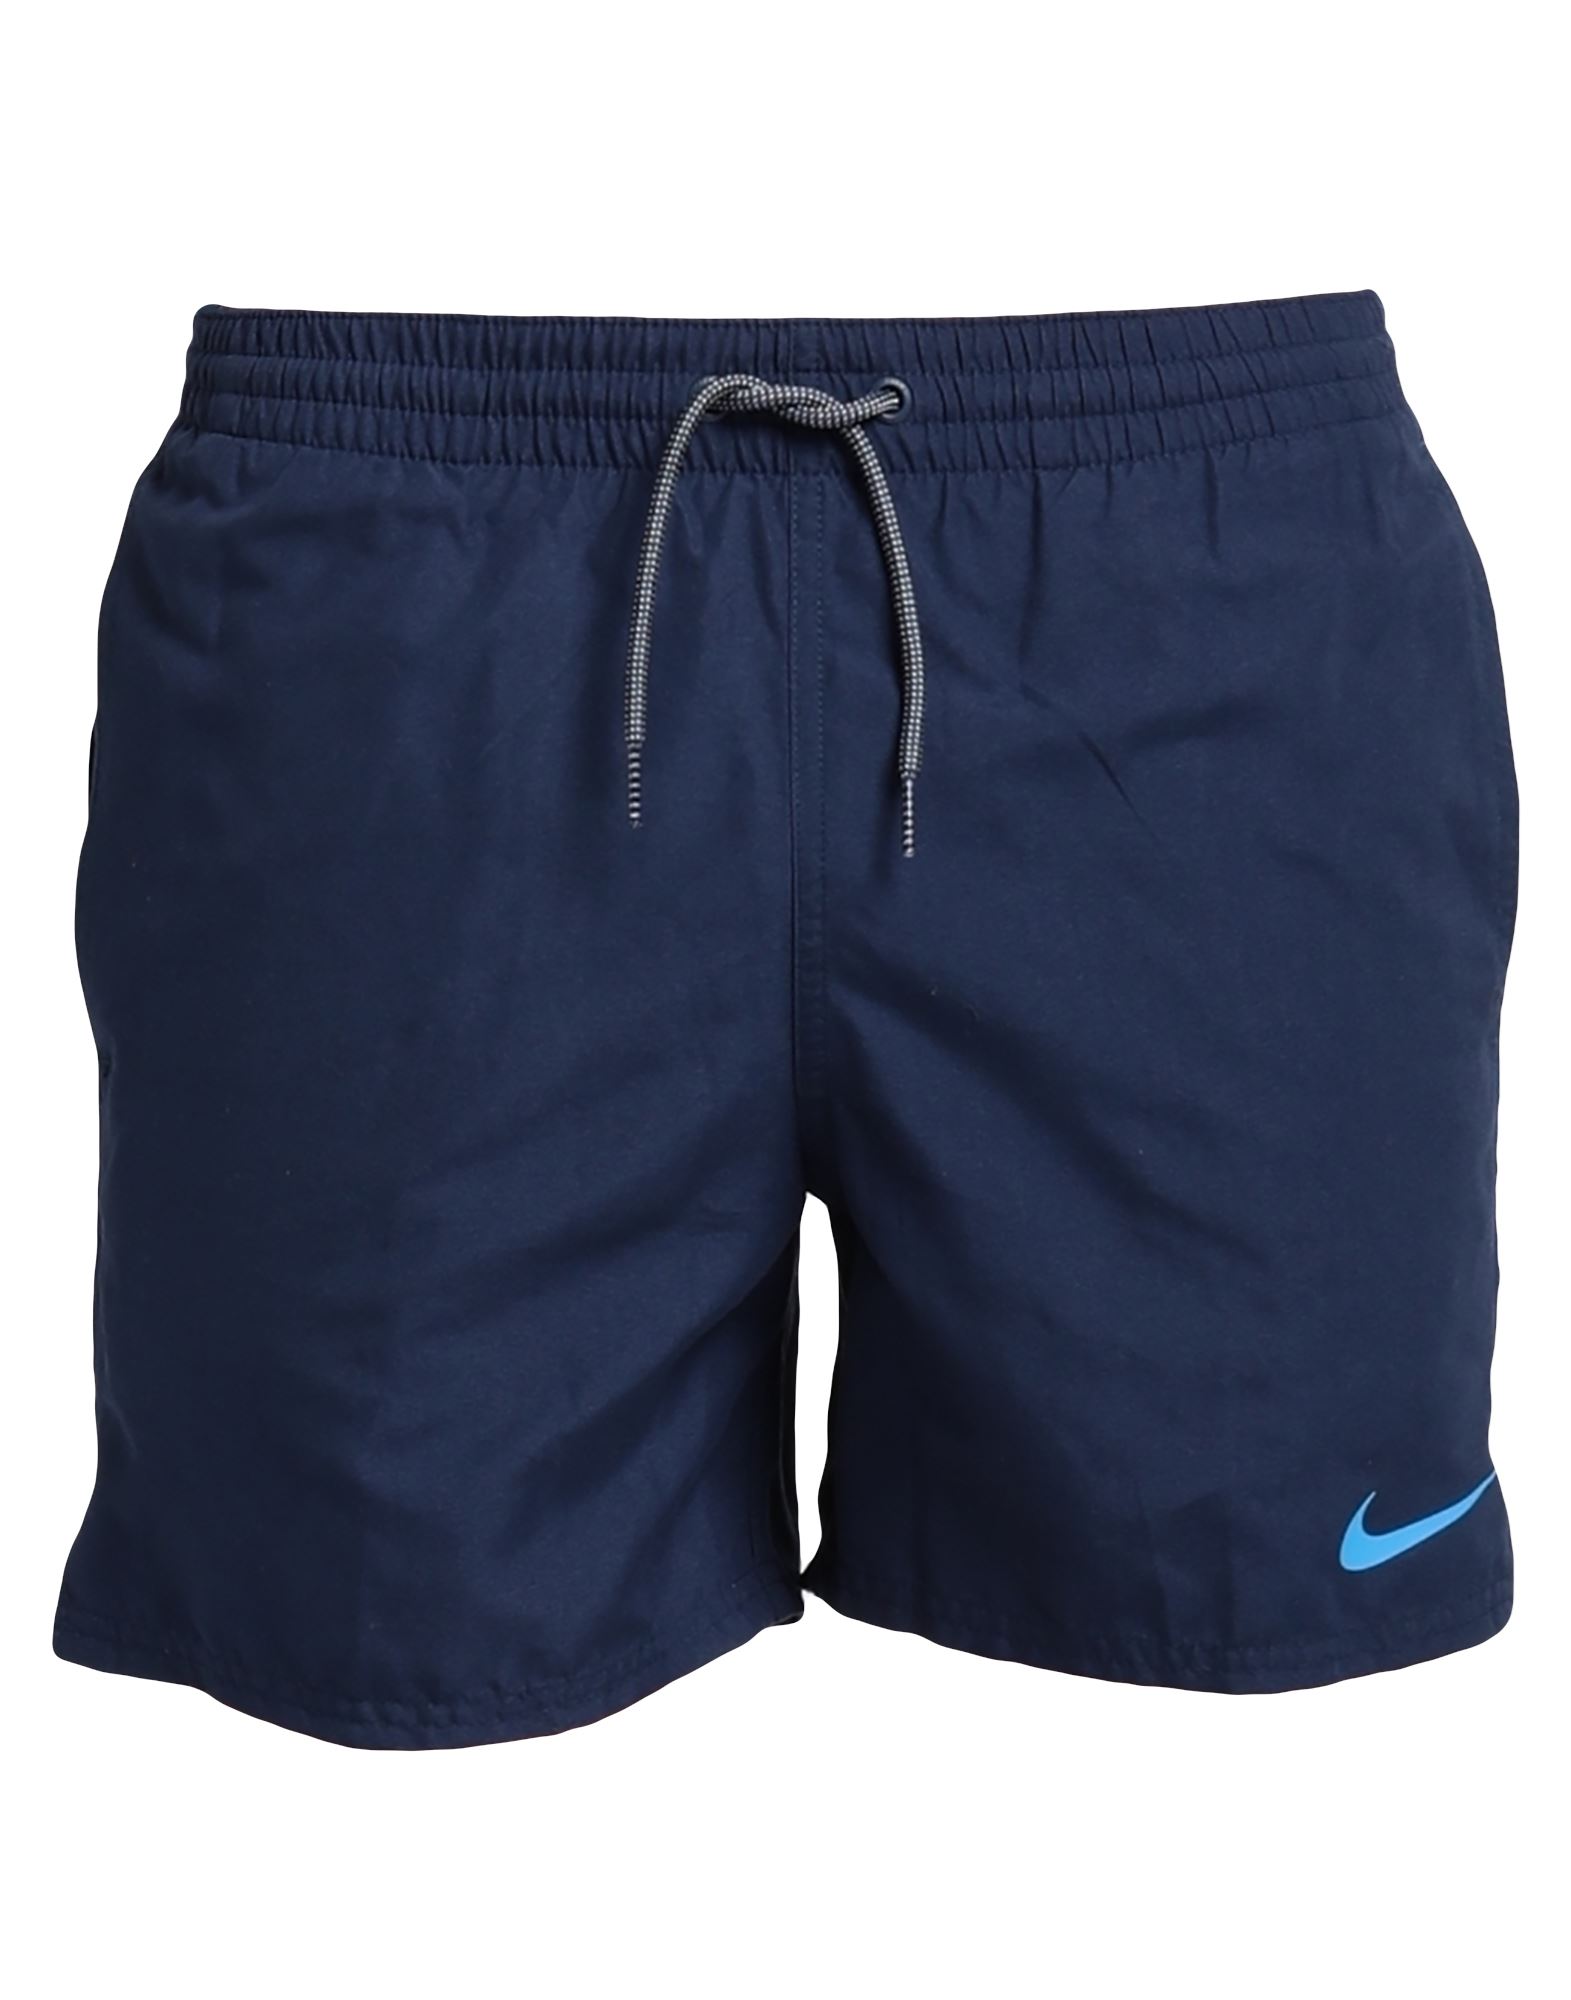 Nike Swim Trunks In Navy Blue